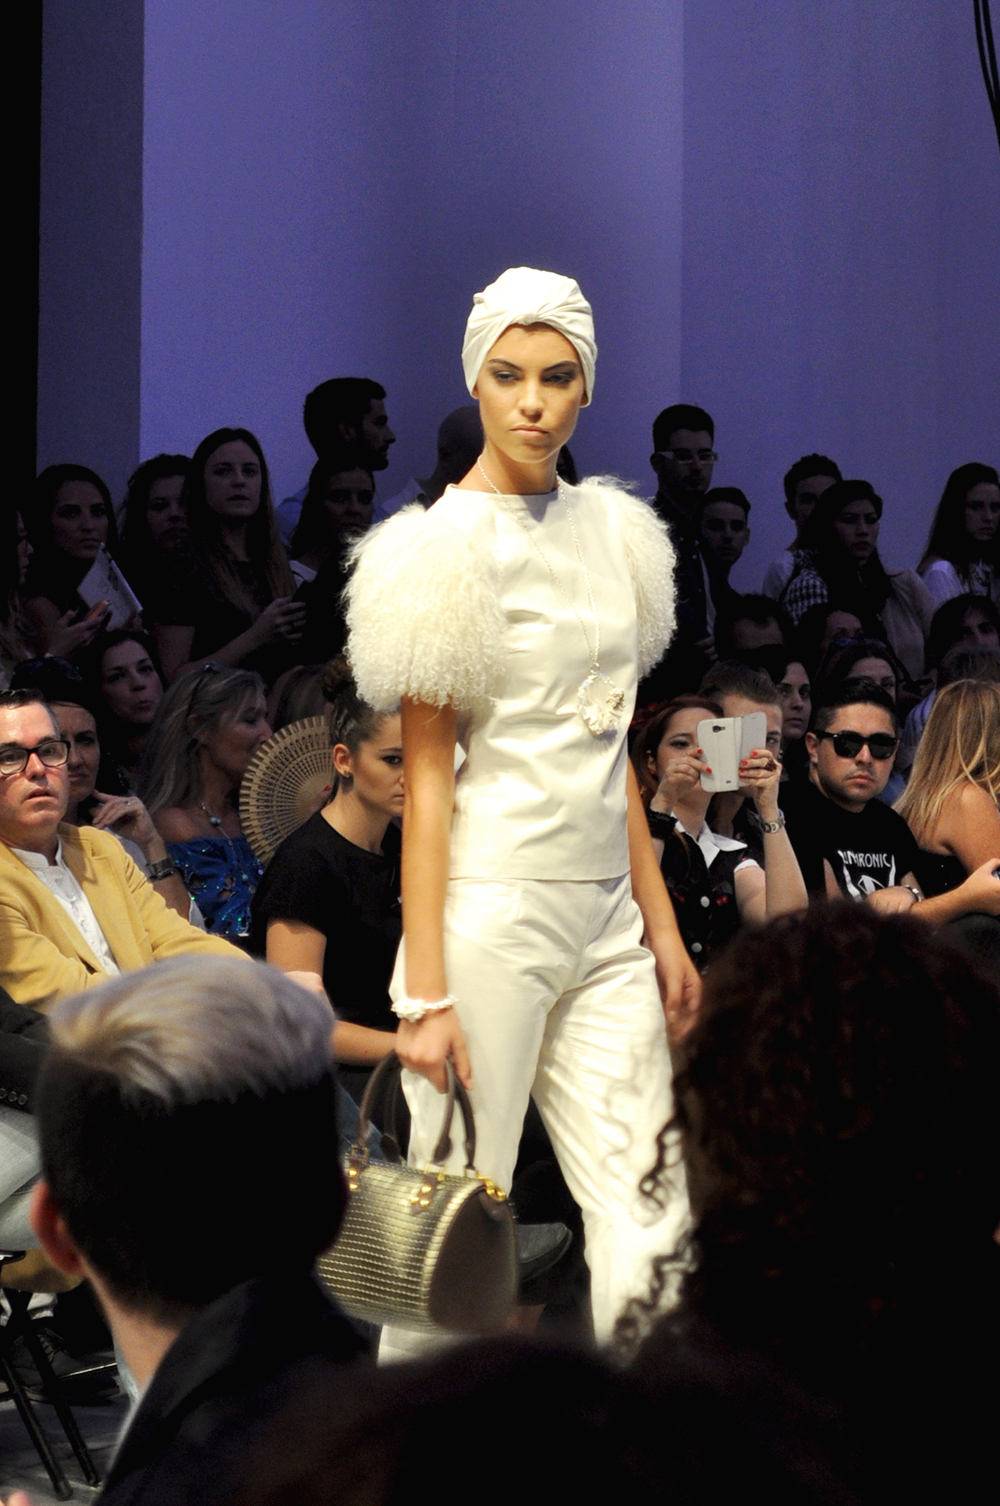 GS ESSENCE'S LIVE gabriel seguí peletería XVII Valencia Fashion week, something fashion blogger spain leather fur design show catwalk, vfw 17 museo del carmen